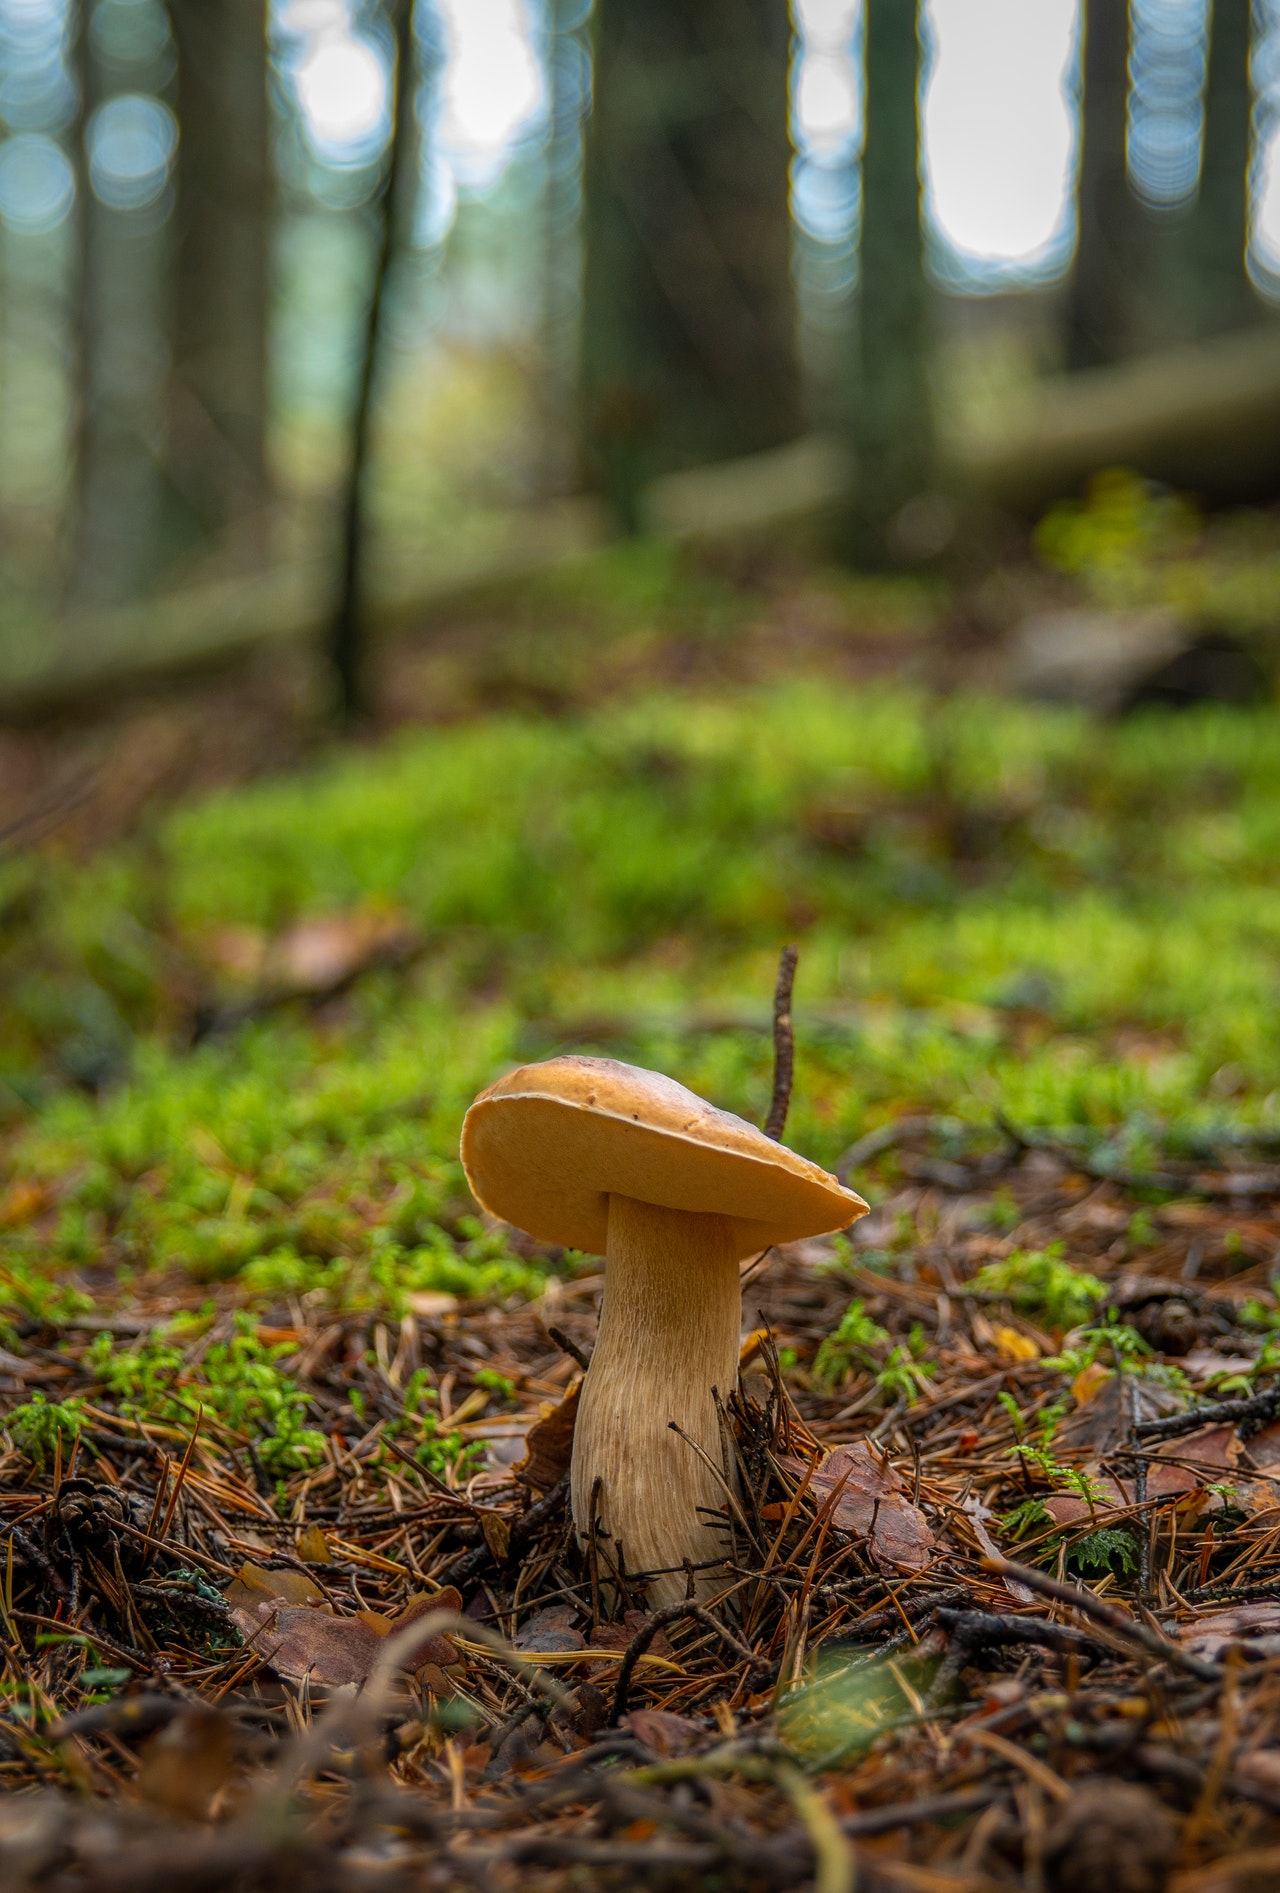 shallow-focus-photo-of-mushroom-in-ground-1685647